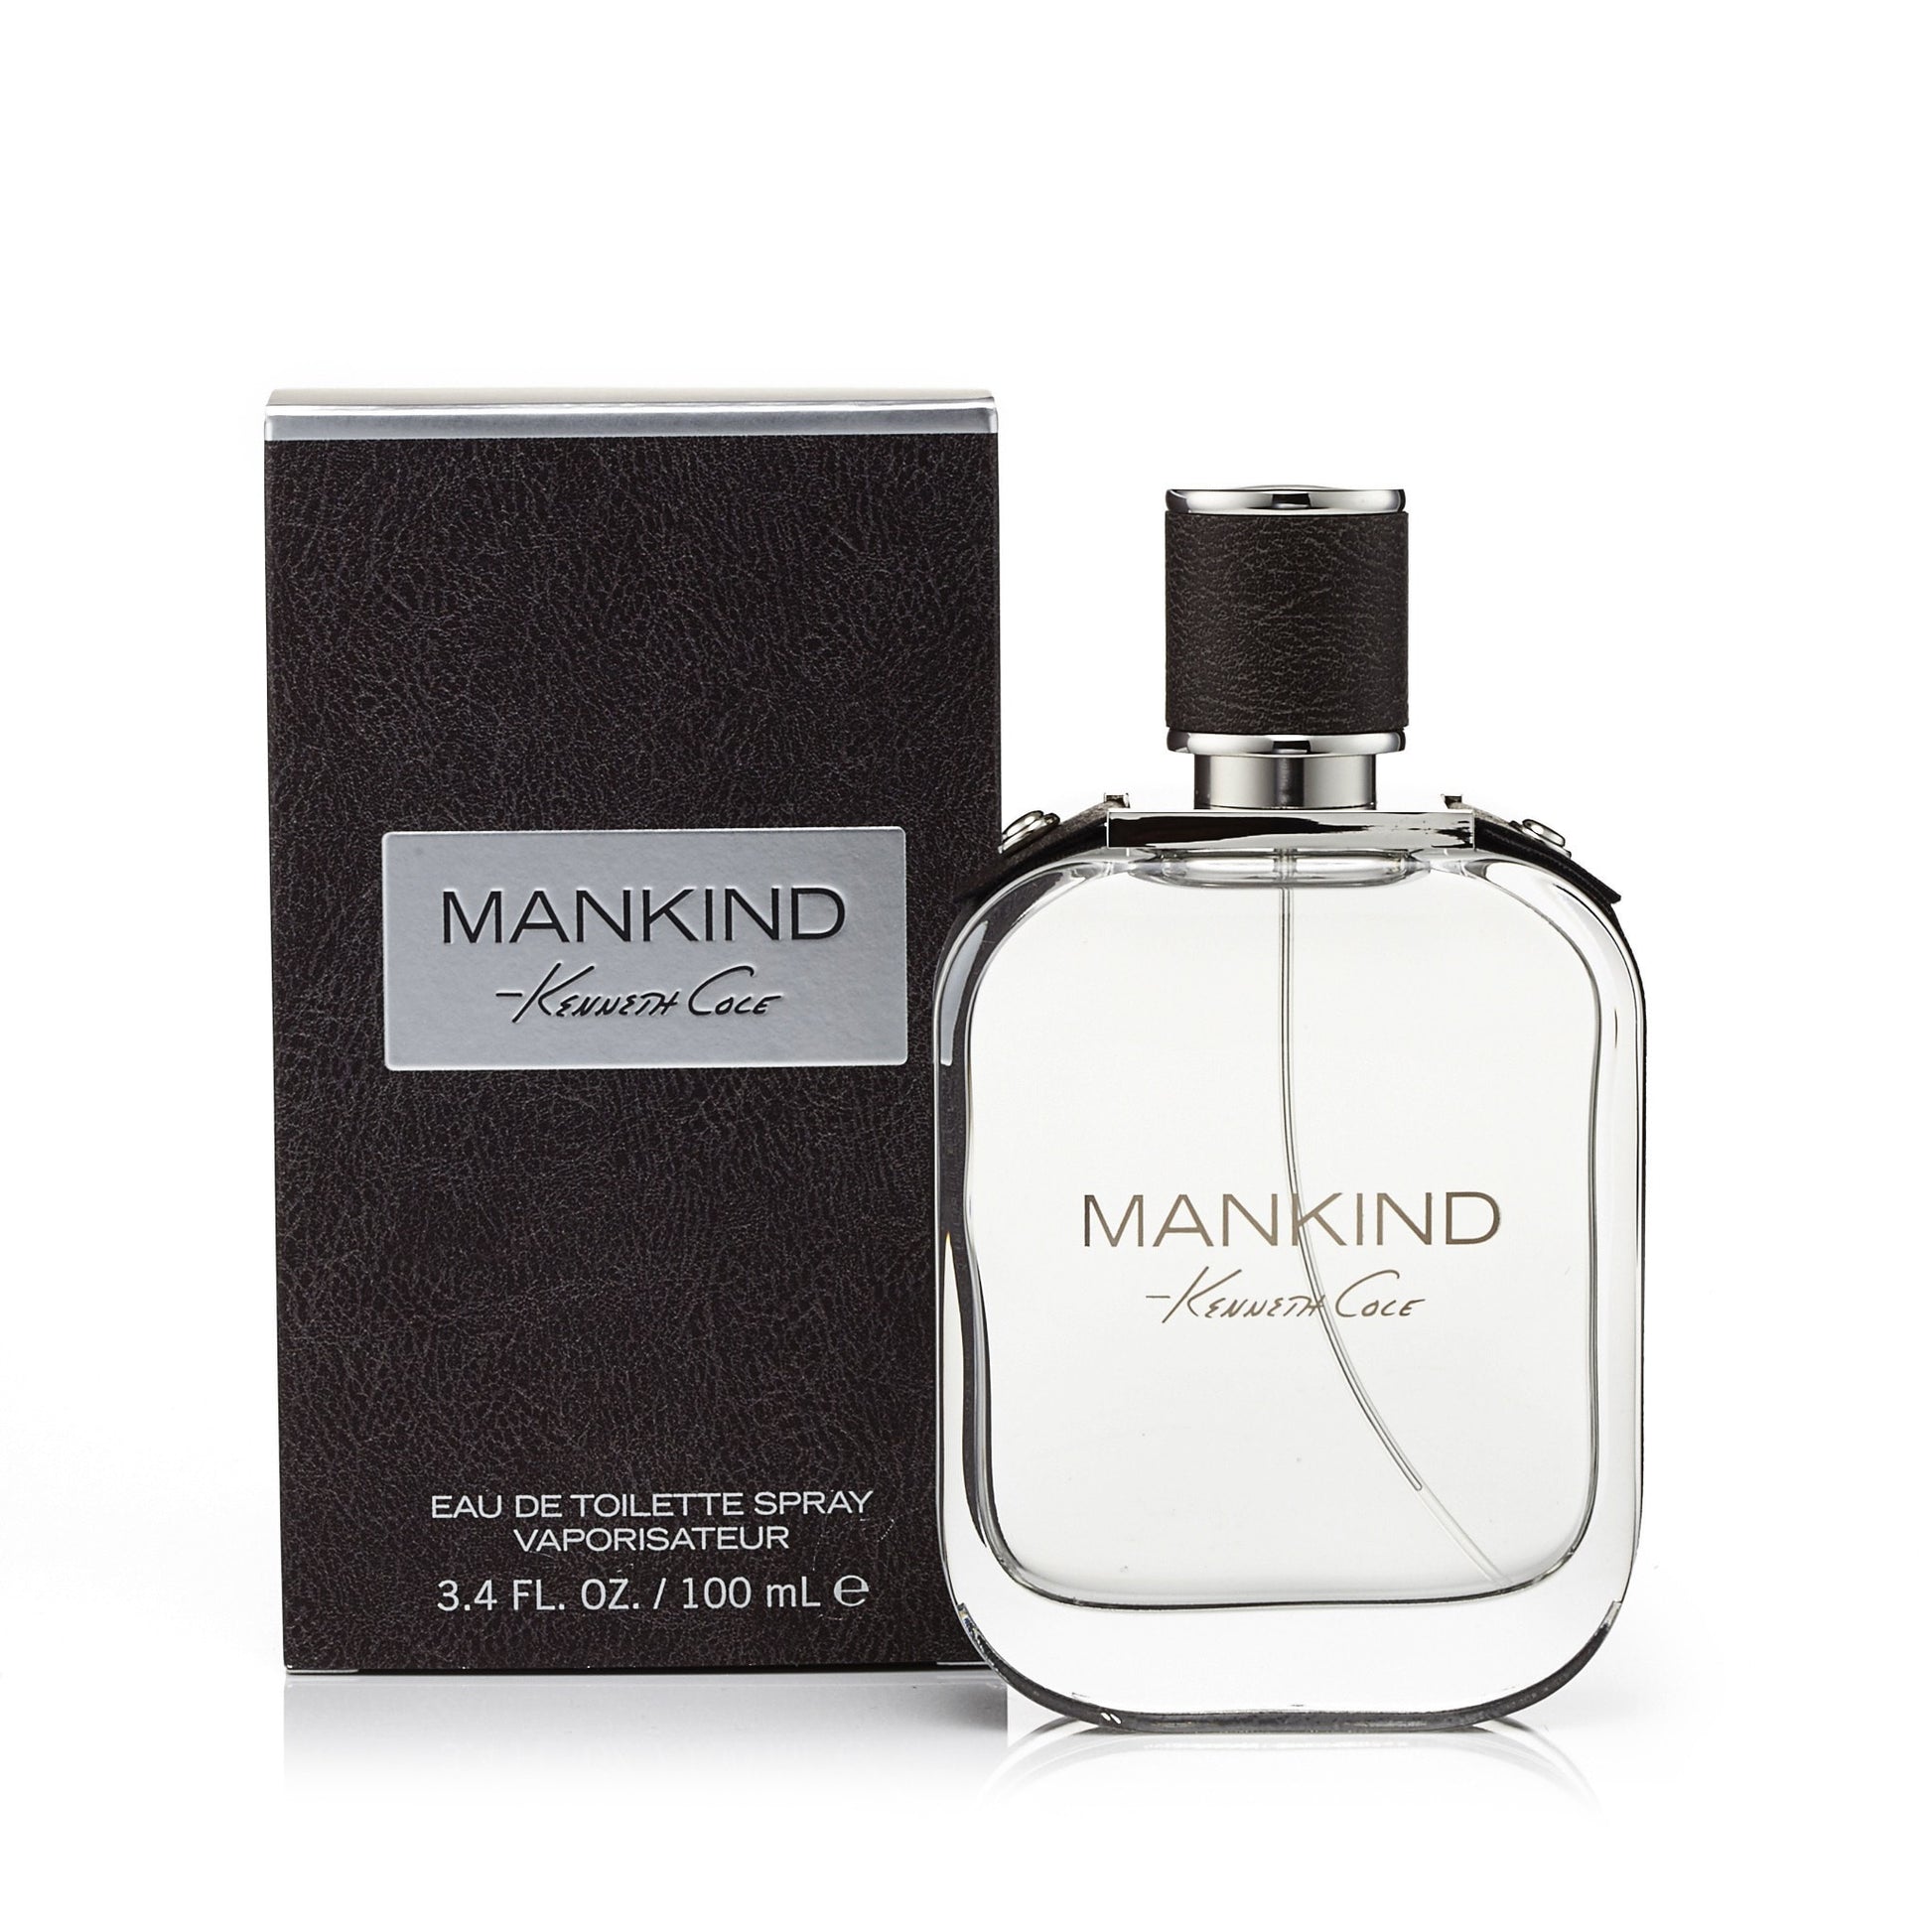 Mankind Eau de Toilette Spray for Men by Kenneth Cole 3.4 oz. Click to open in modal